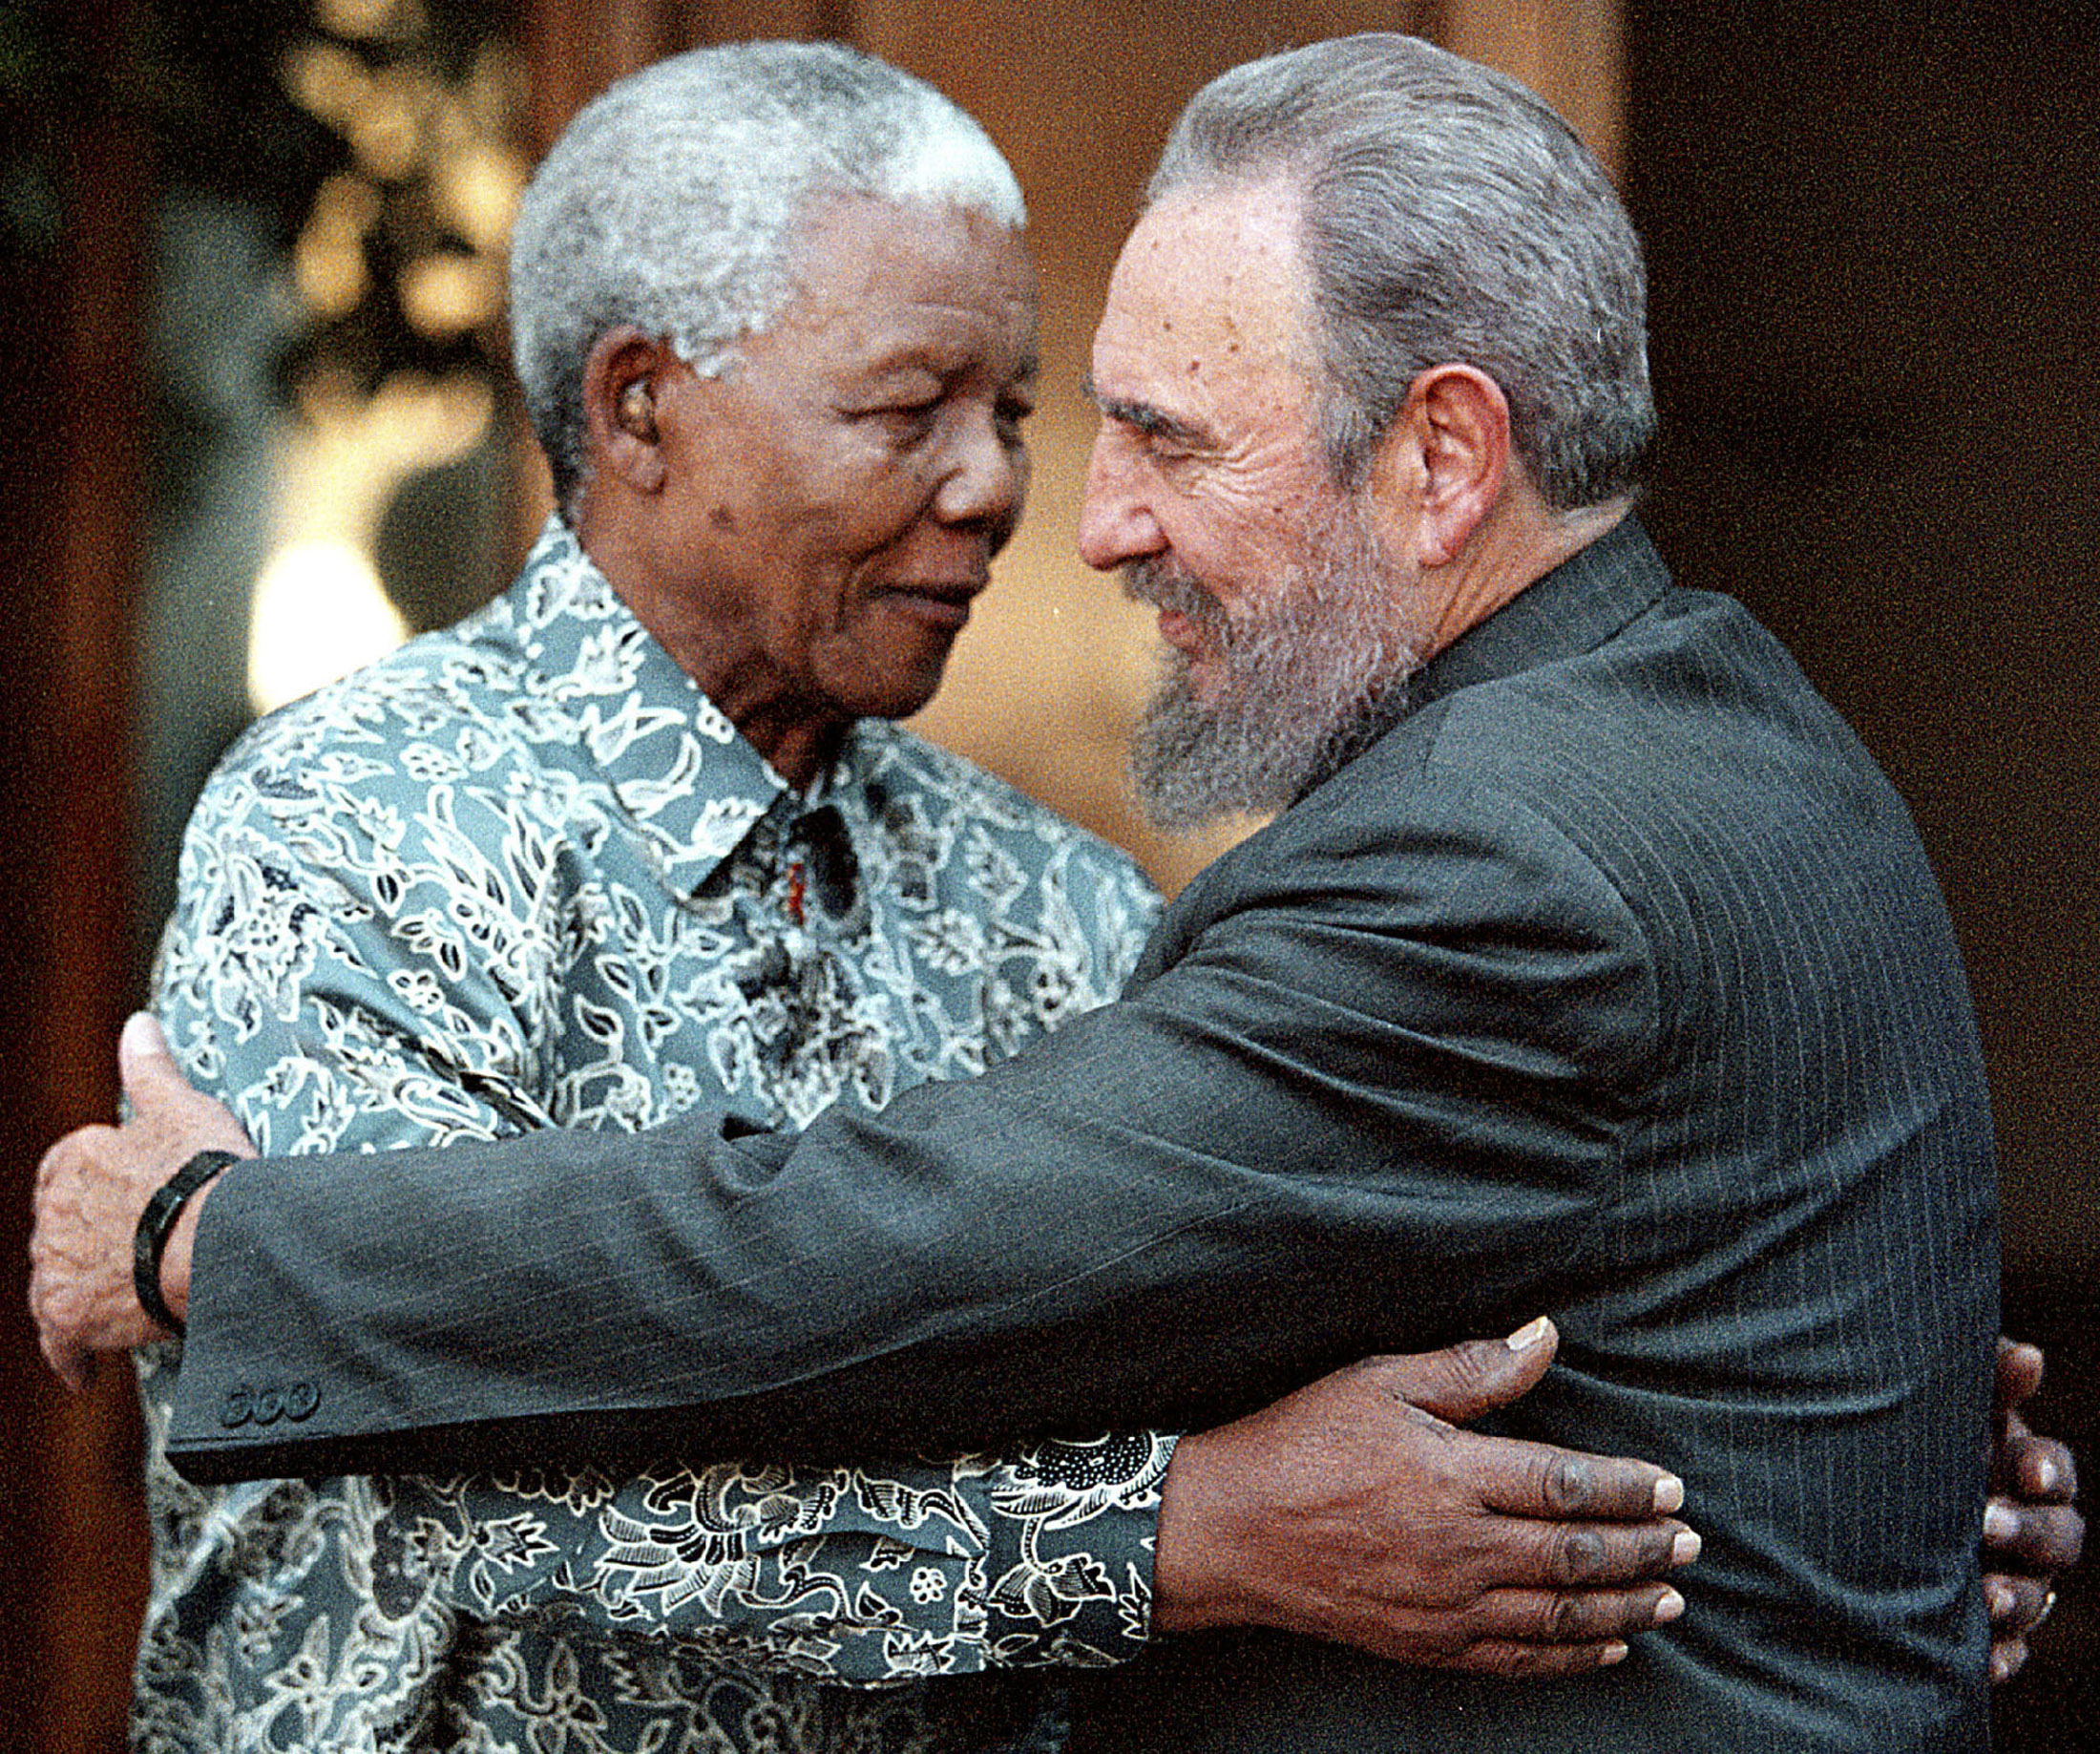 Mandela and Castro